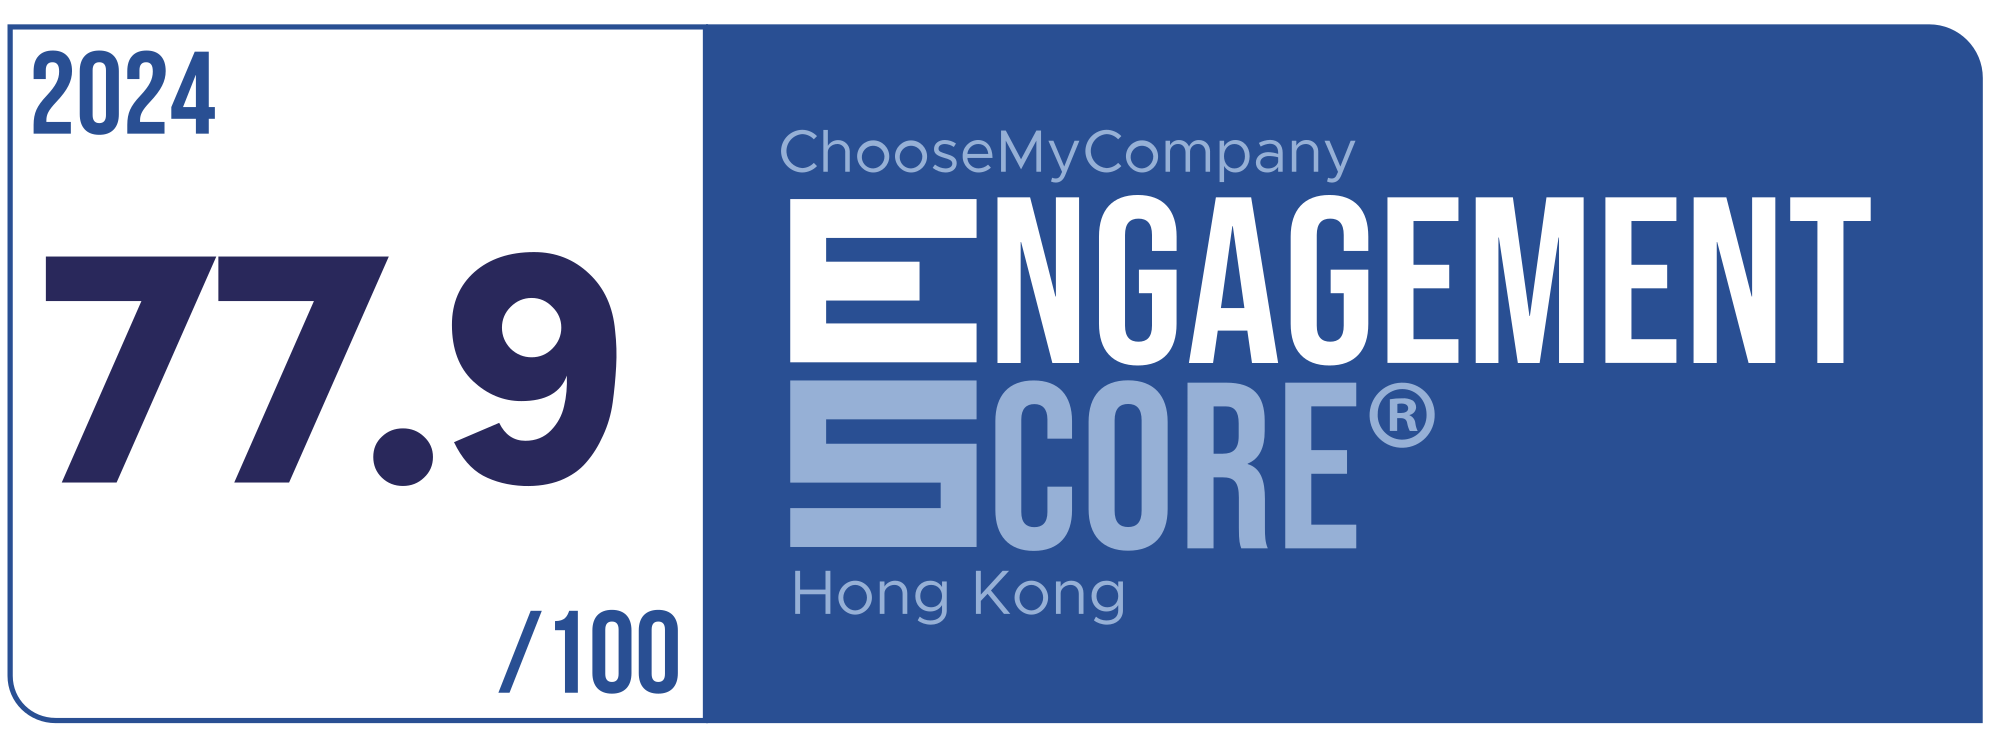 Label Engagement Score 2024 Hong Kong